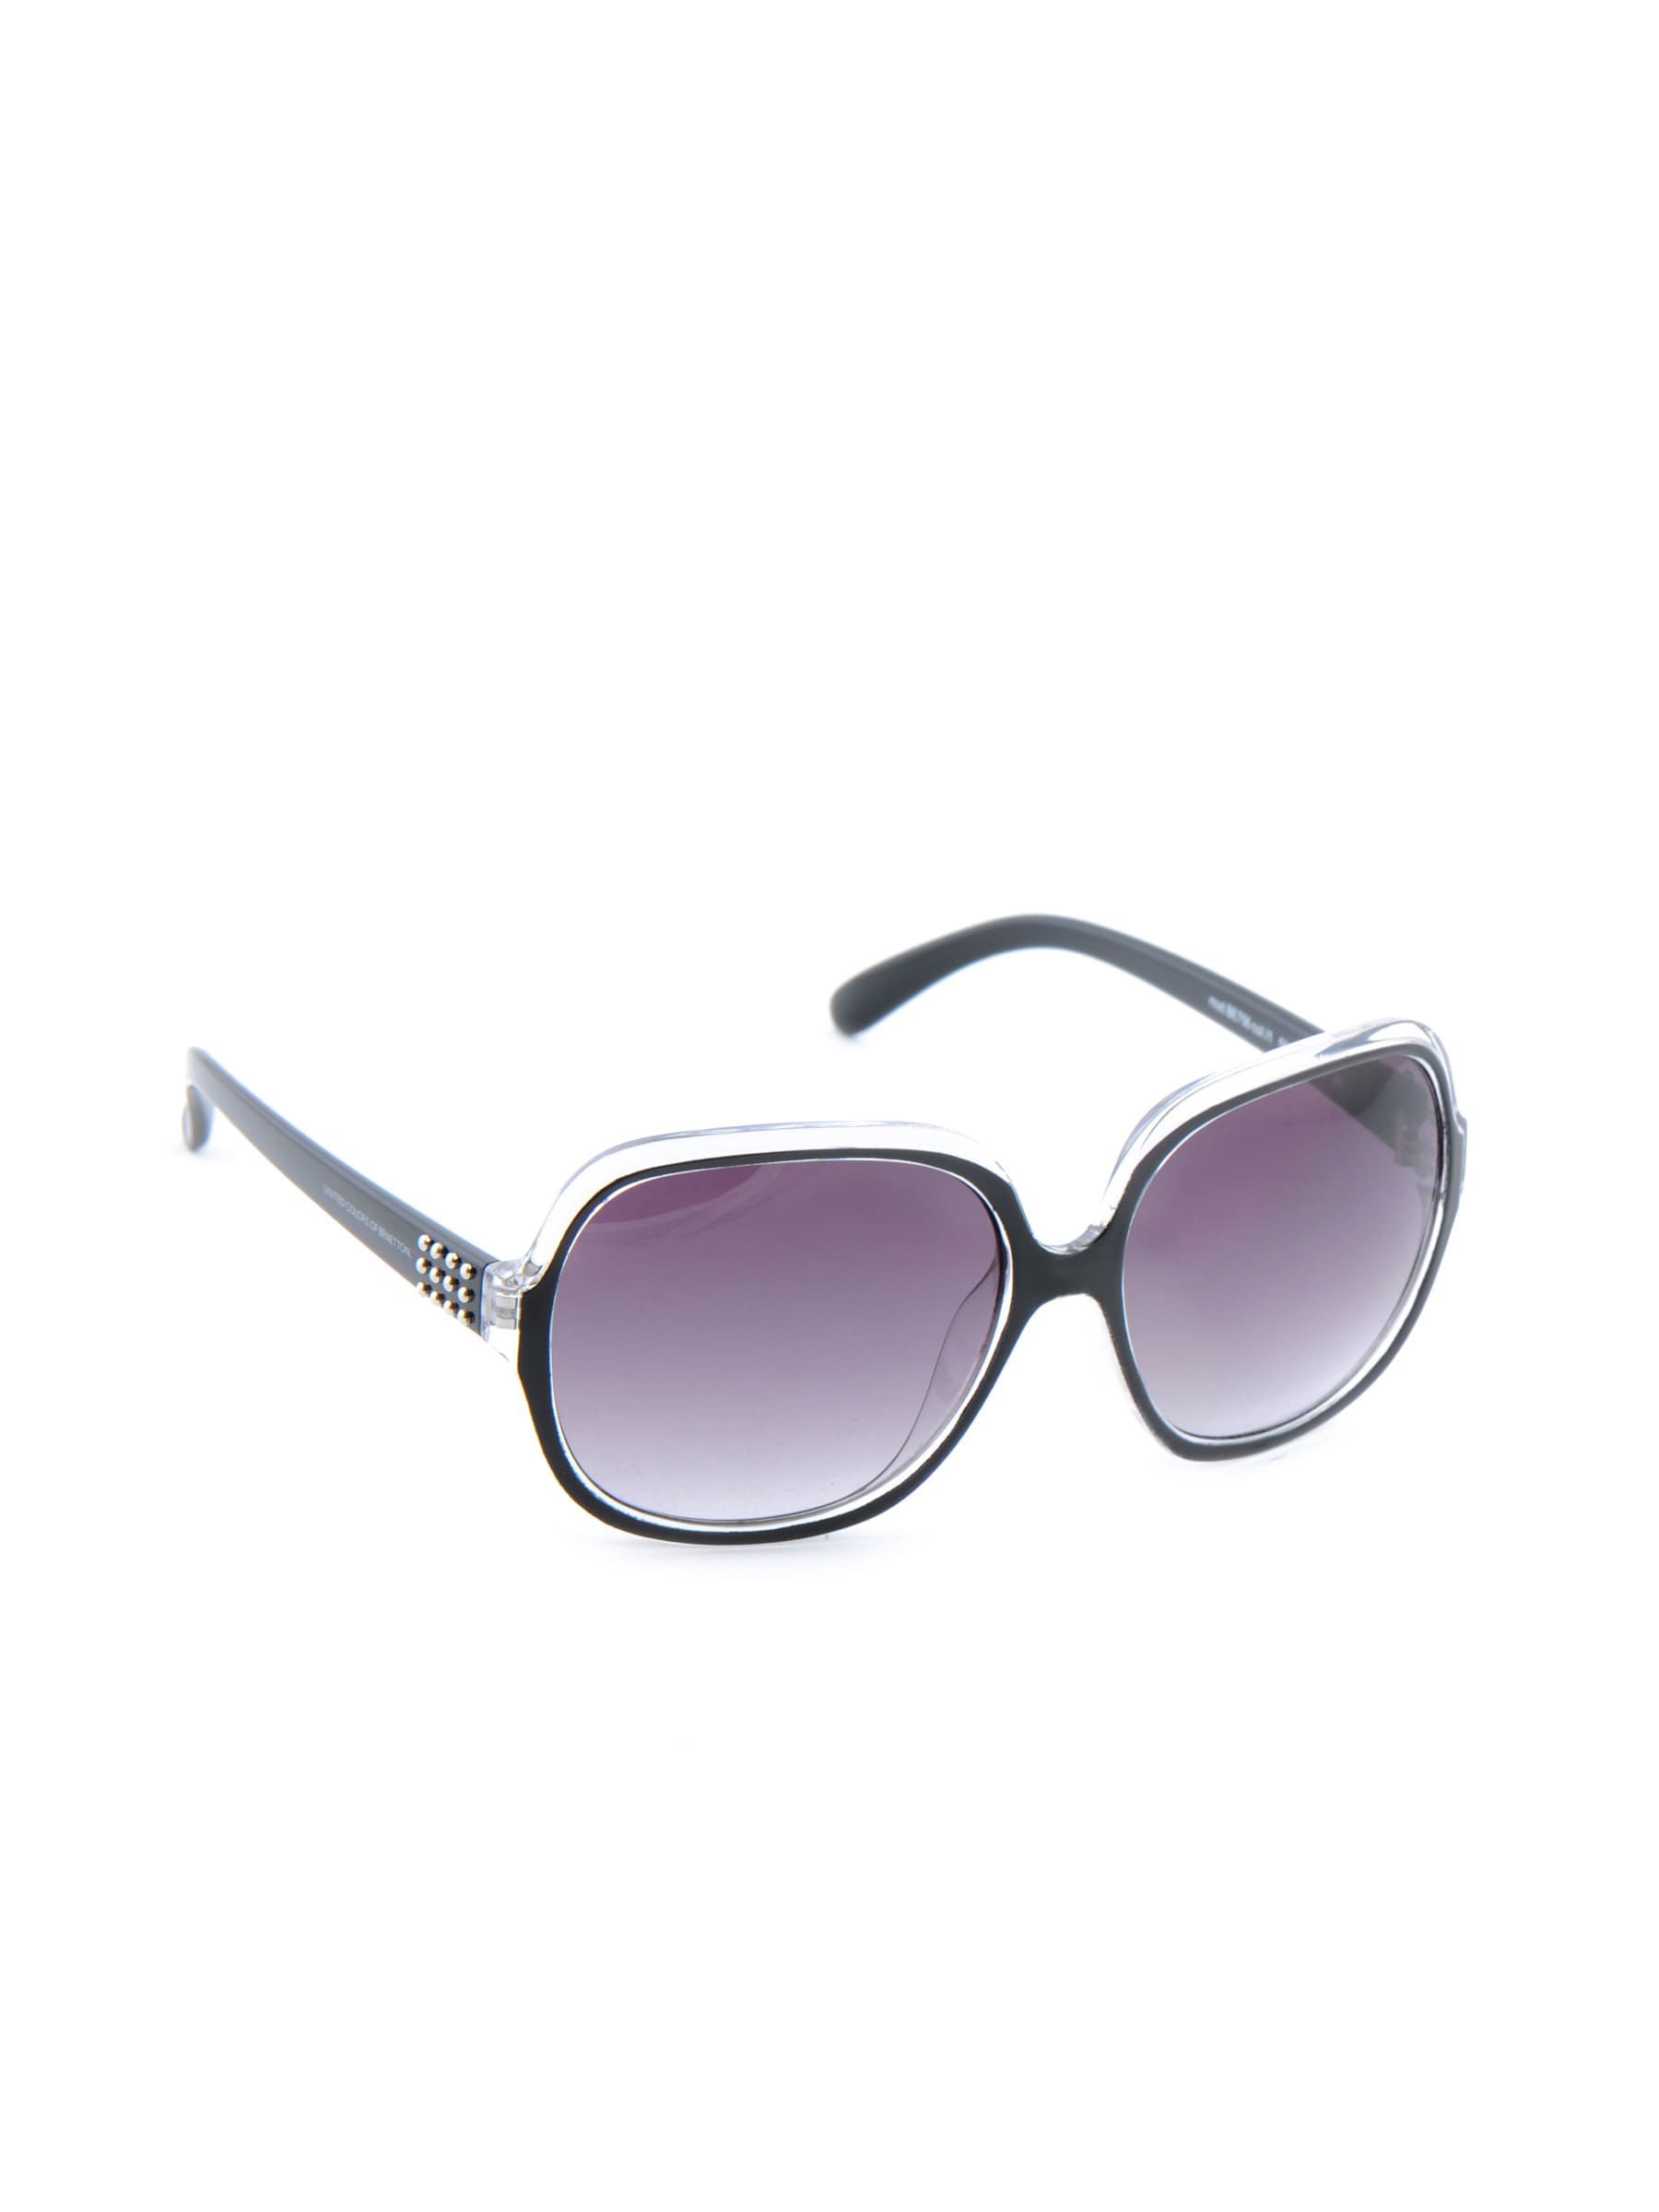 United Colors of Benetton Women Funky Eyewear Black Sunglasses